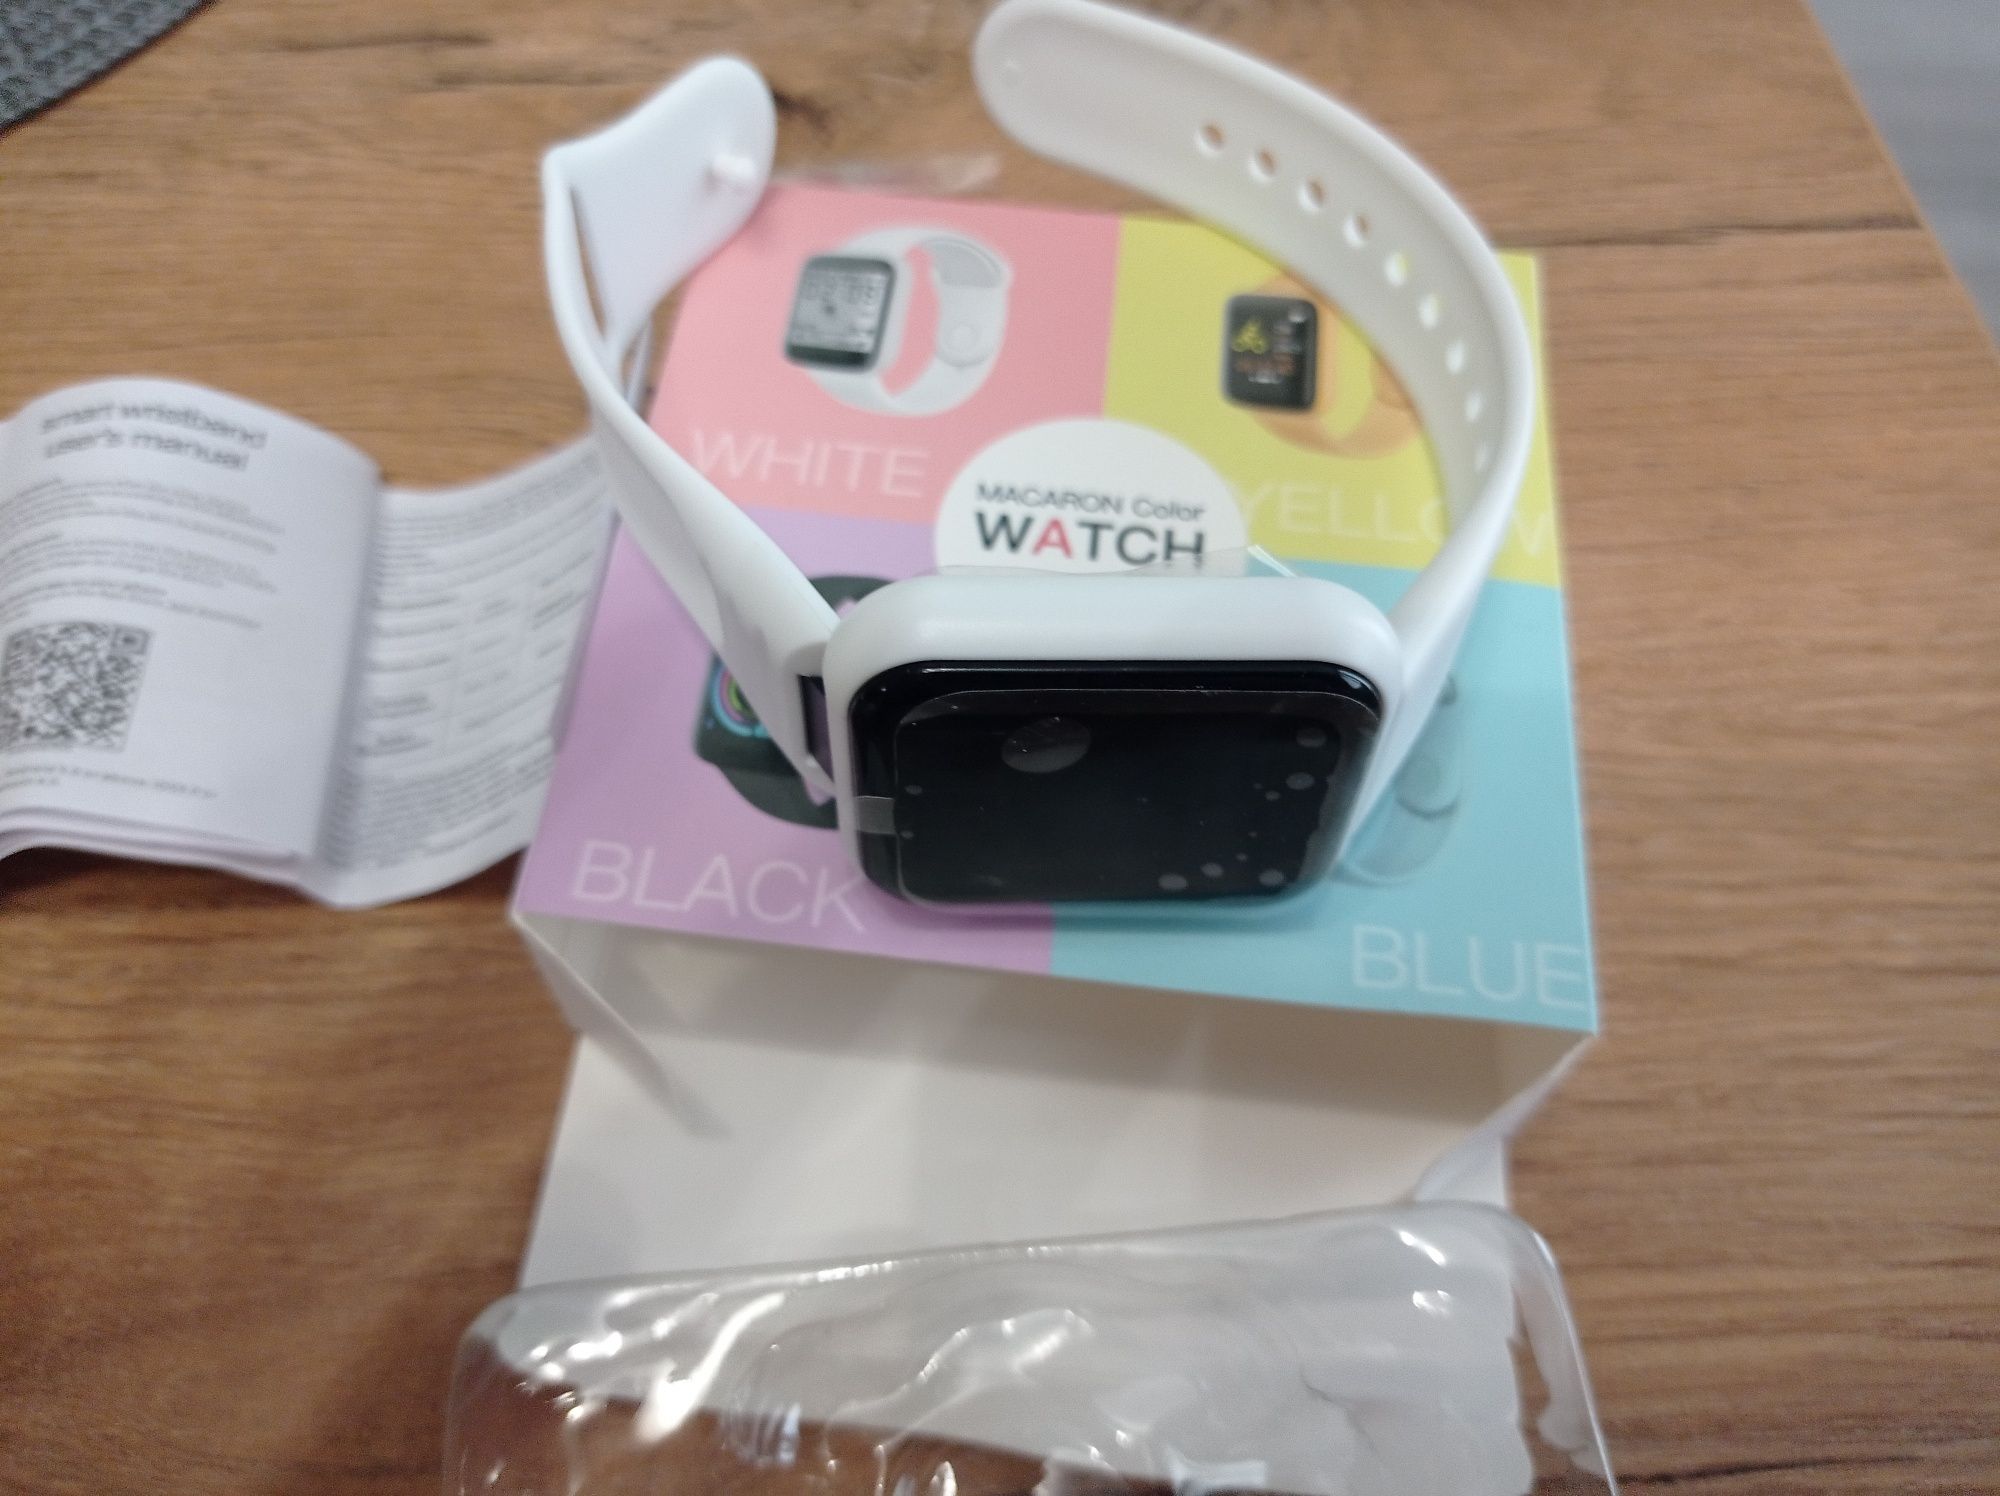 Smartwatch Macaron Color Watch